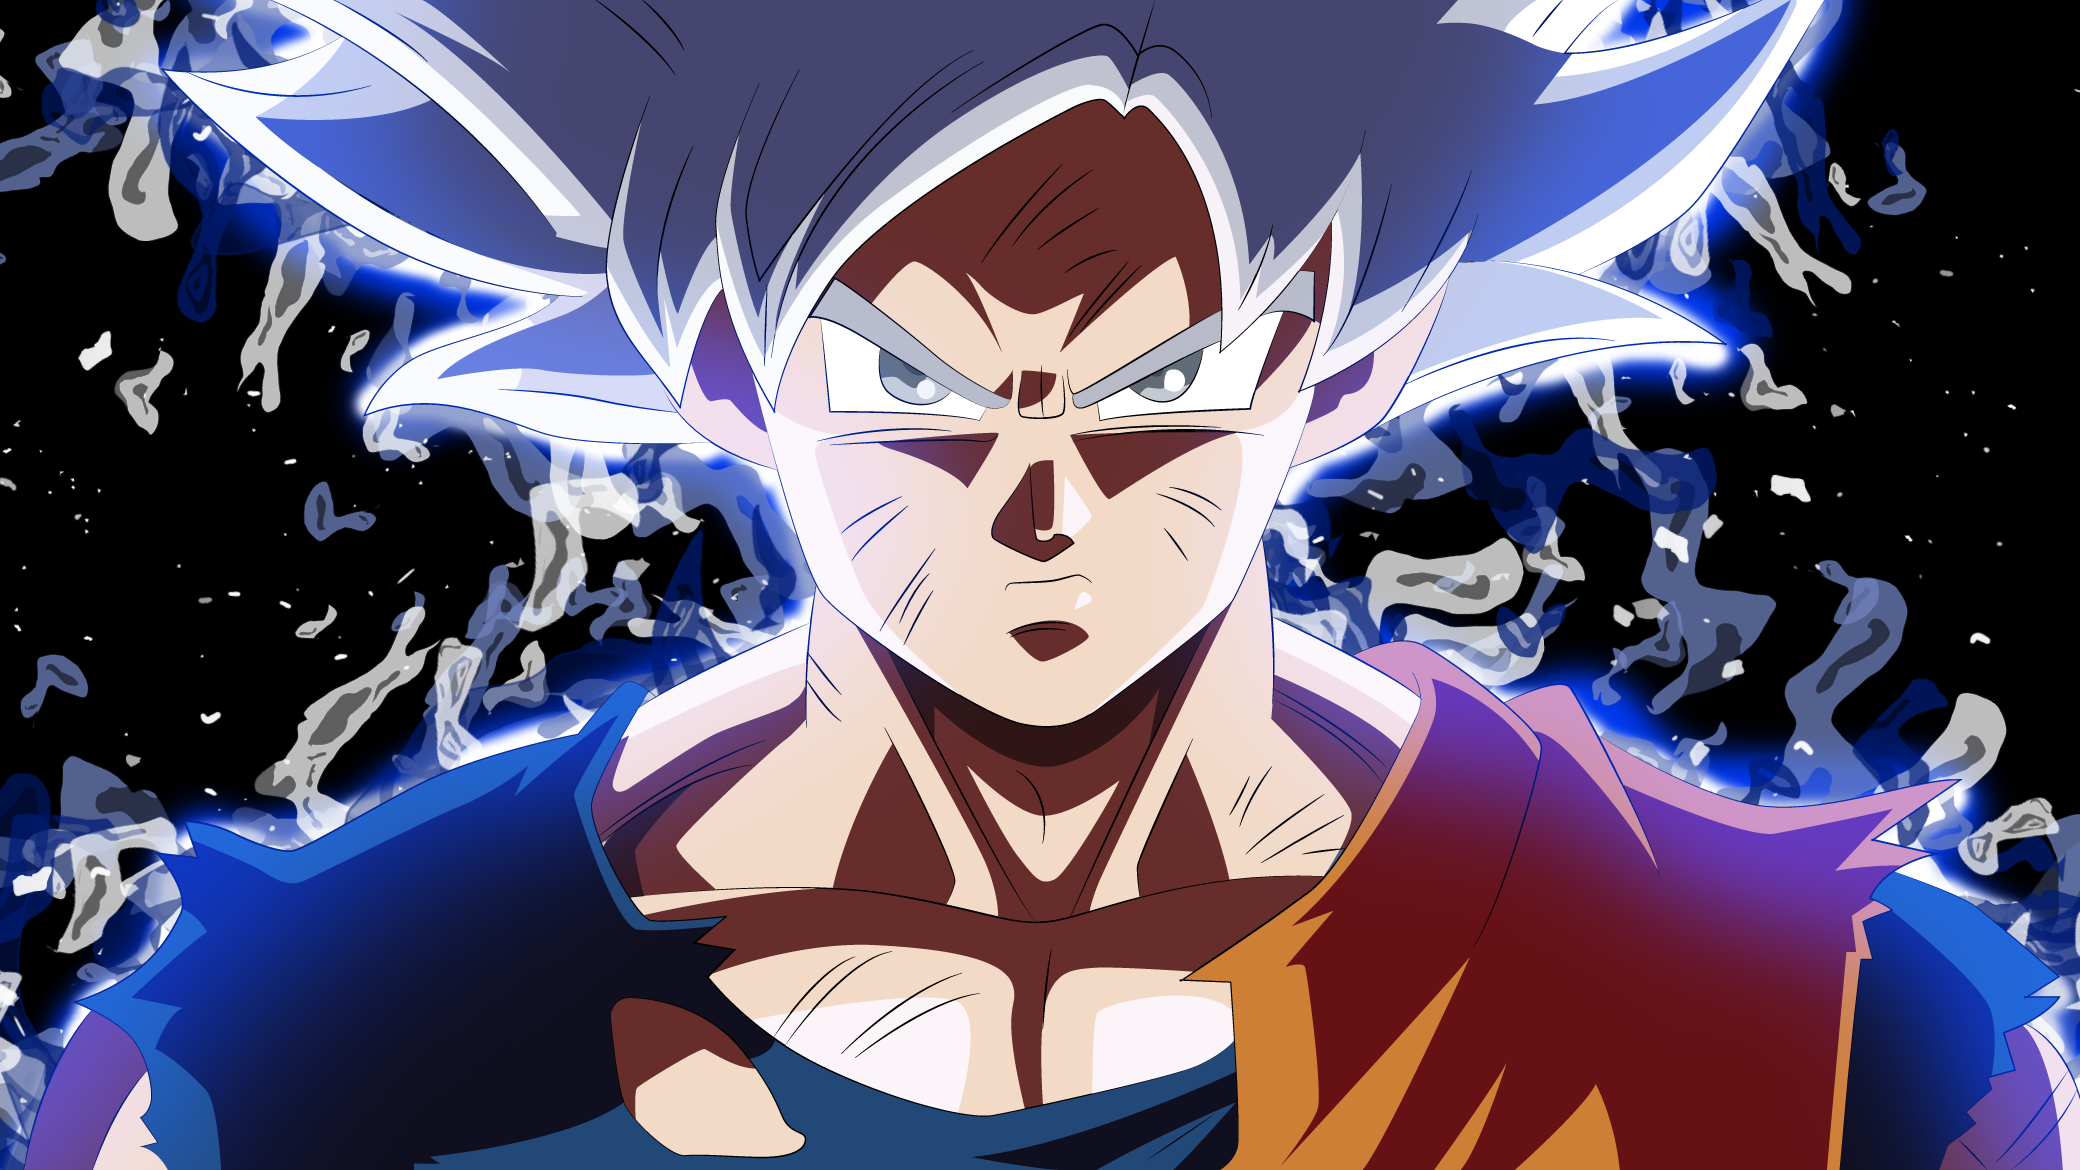 Goku Ultra Instinct by HinaSatoSuper on DeviantArt